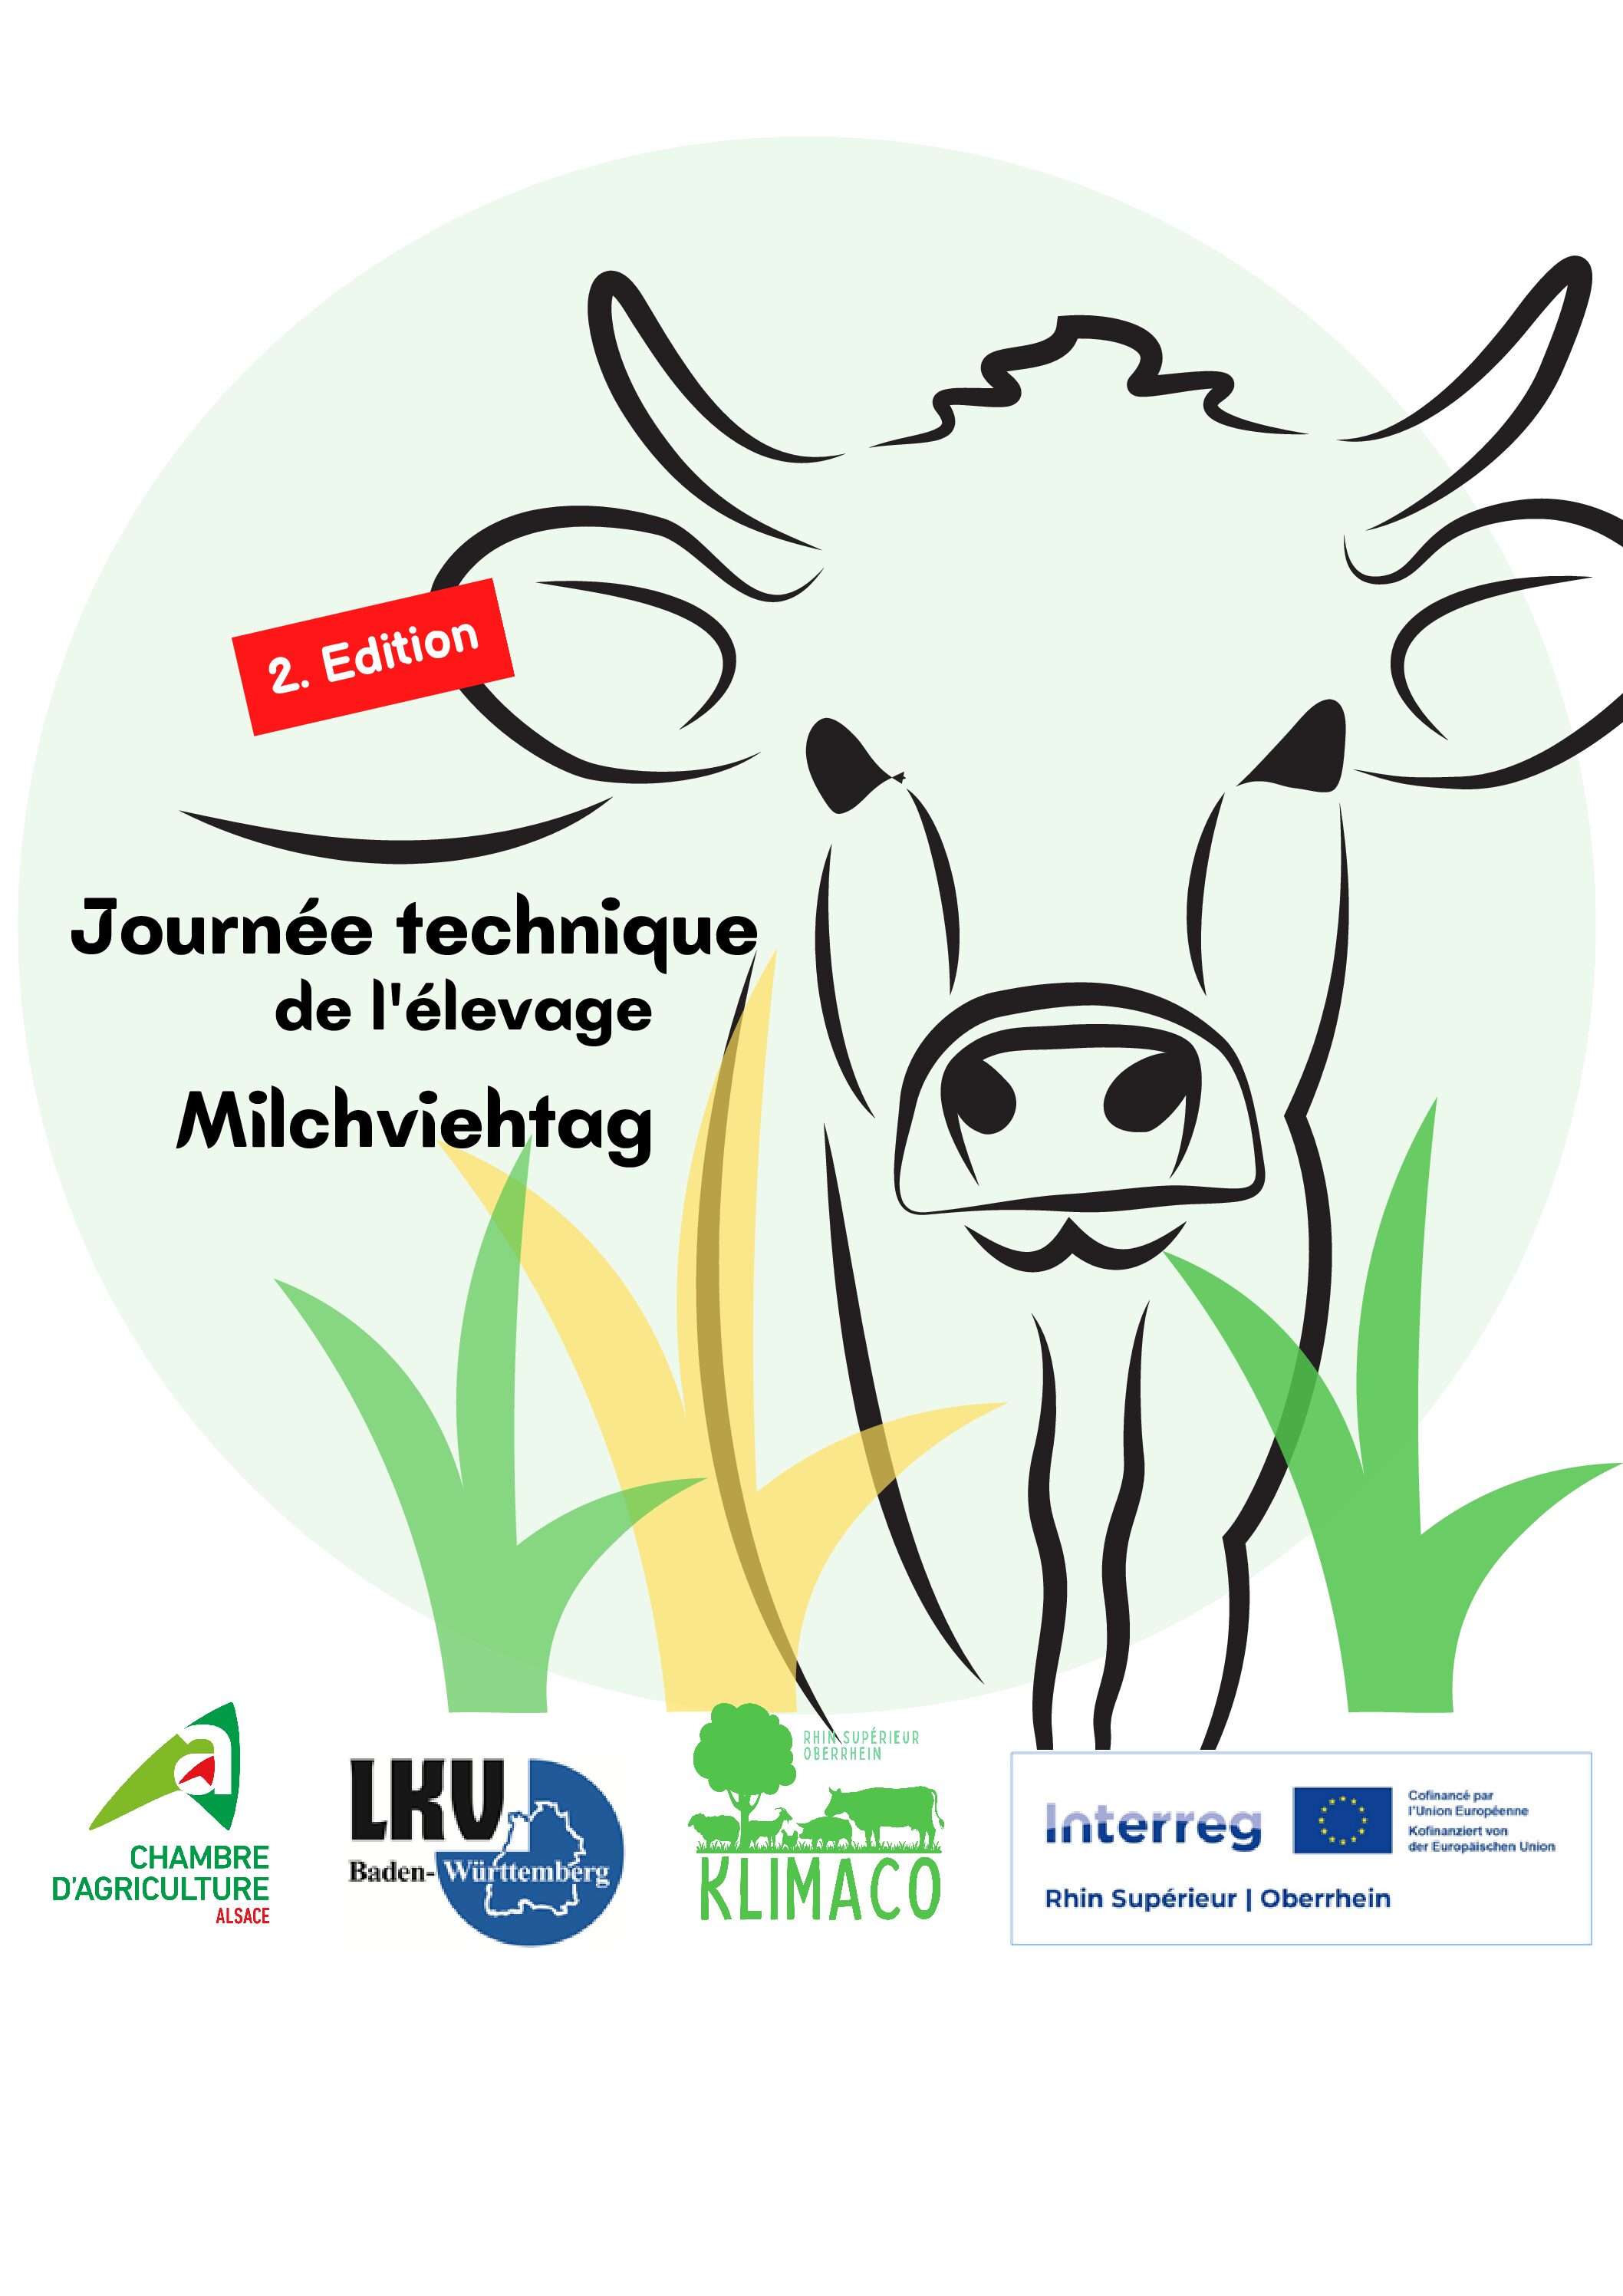 Livestock Symposium